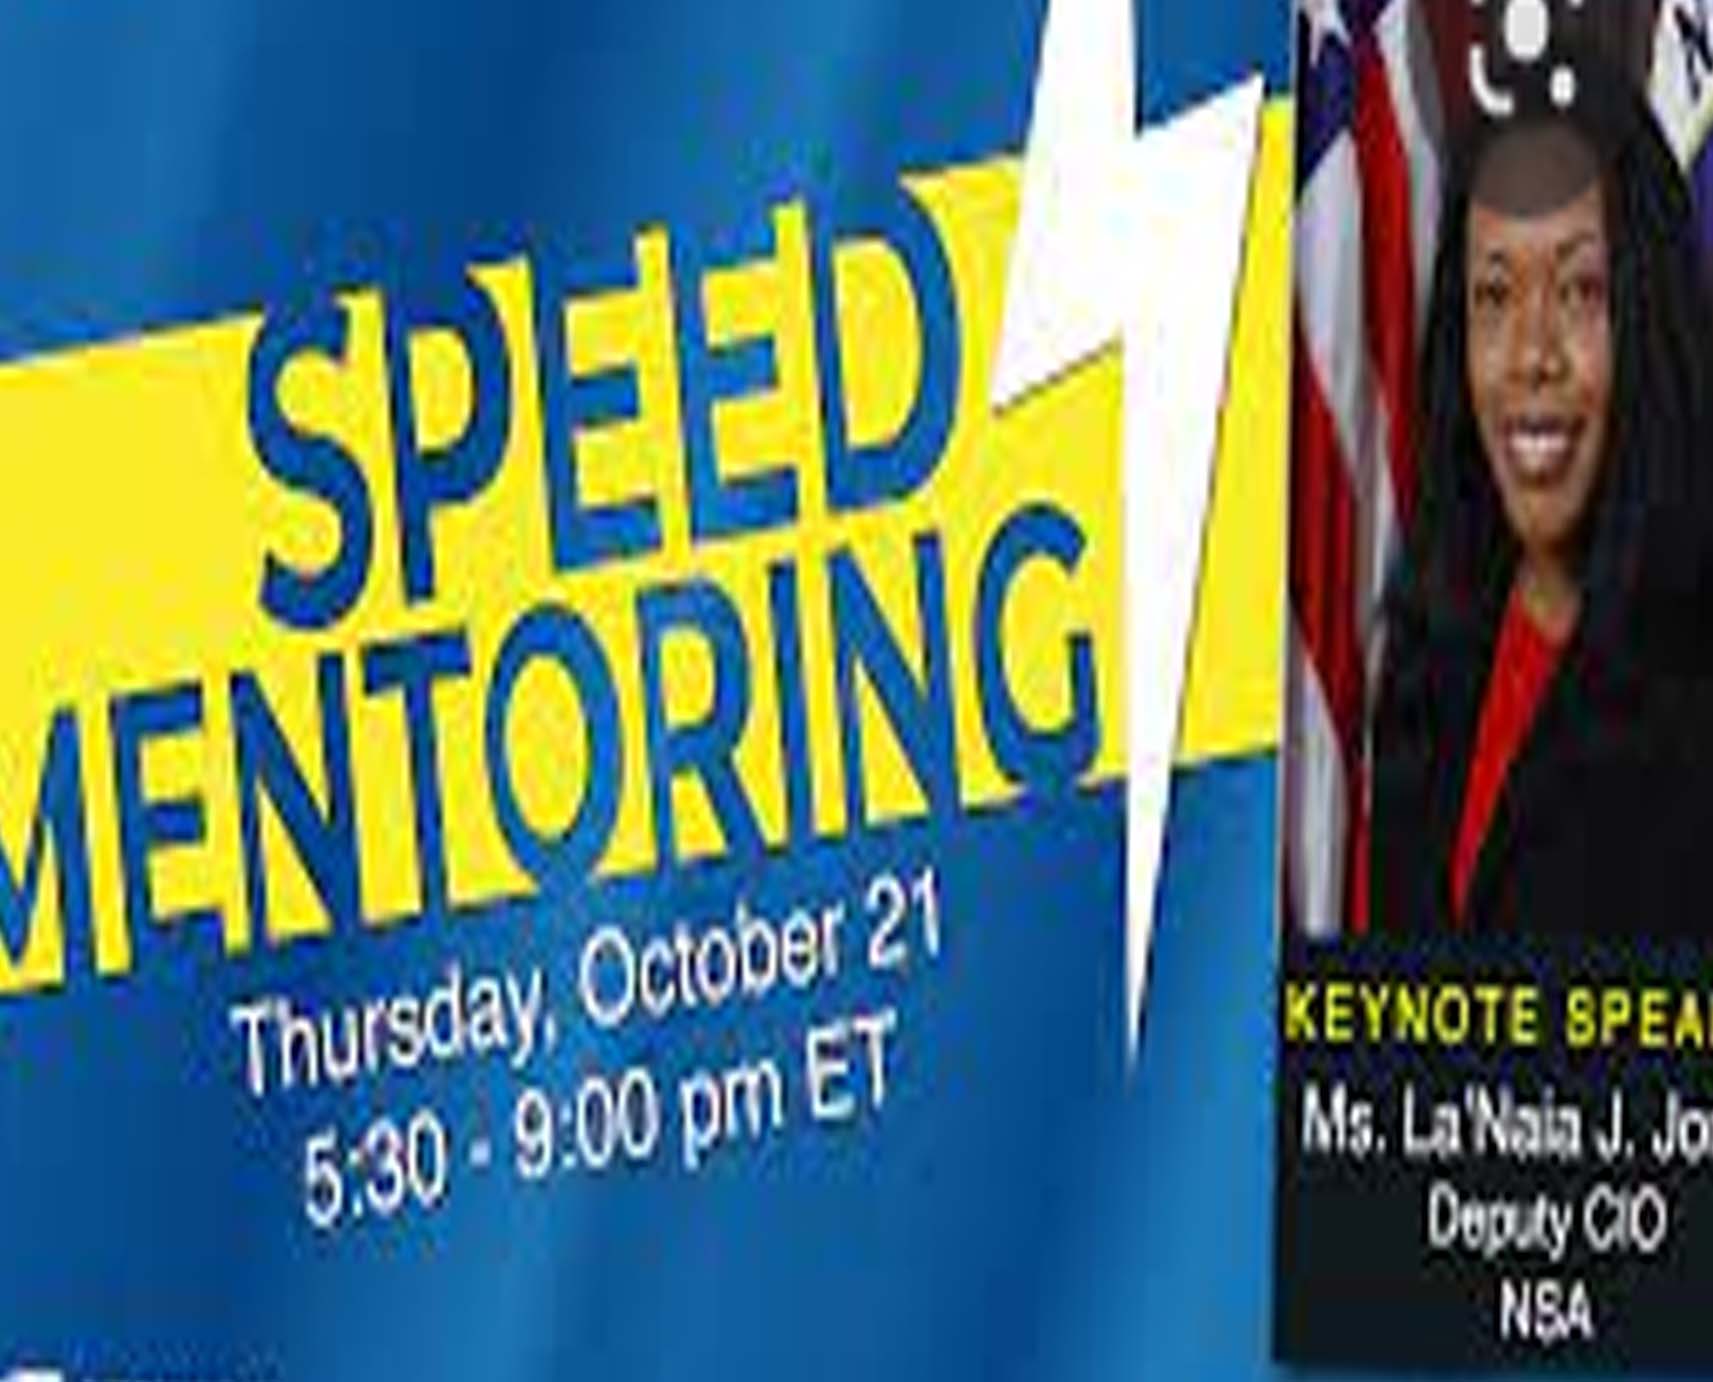 Speed Mentoring Event